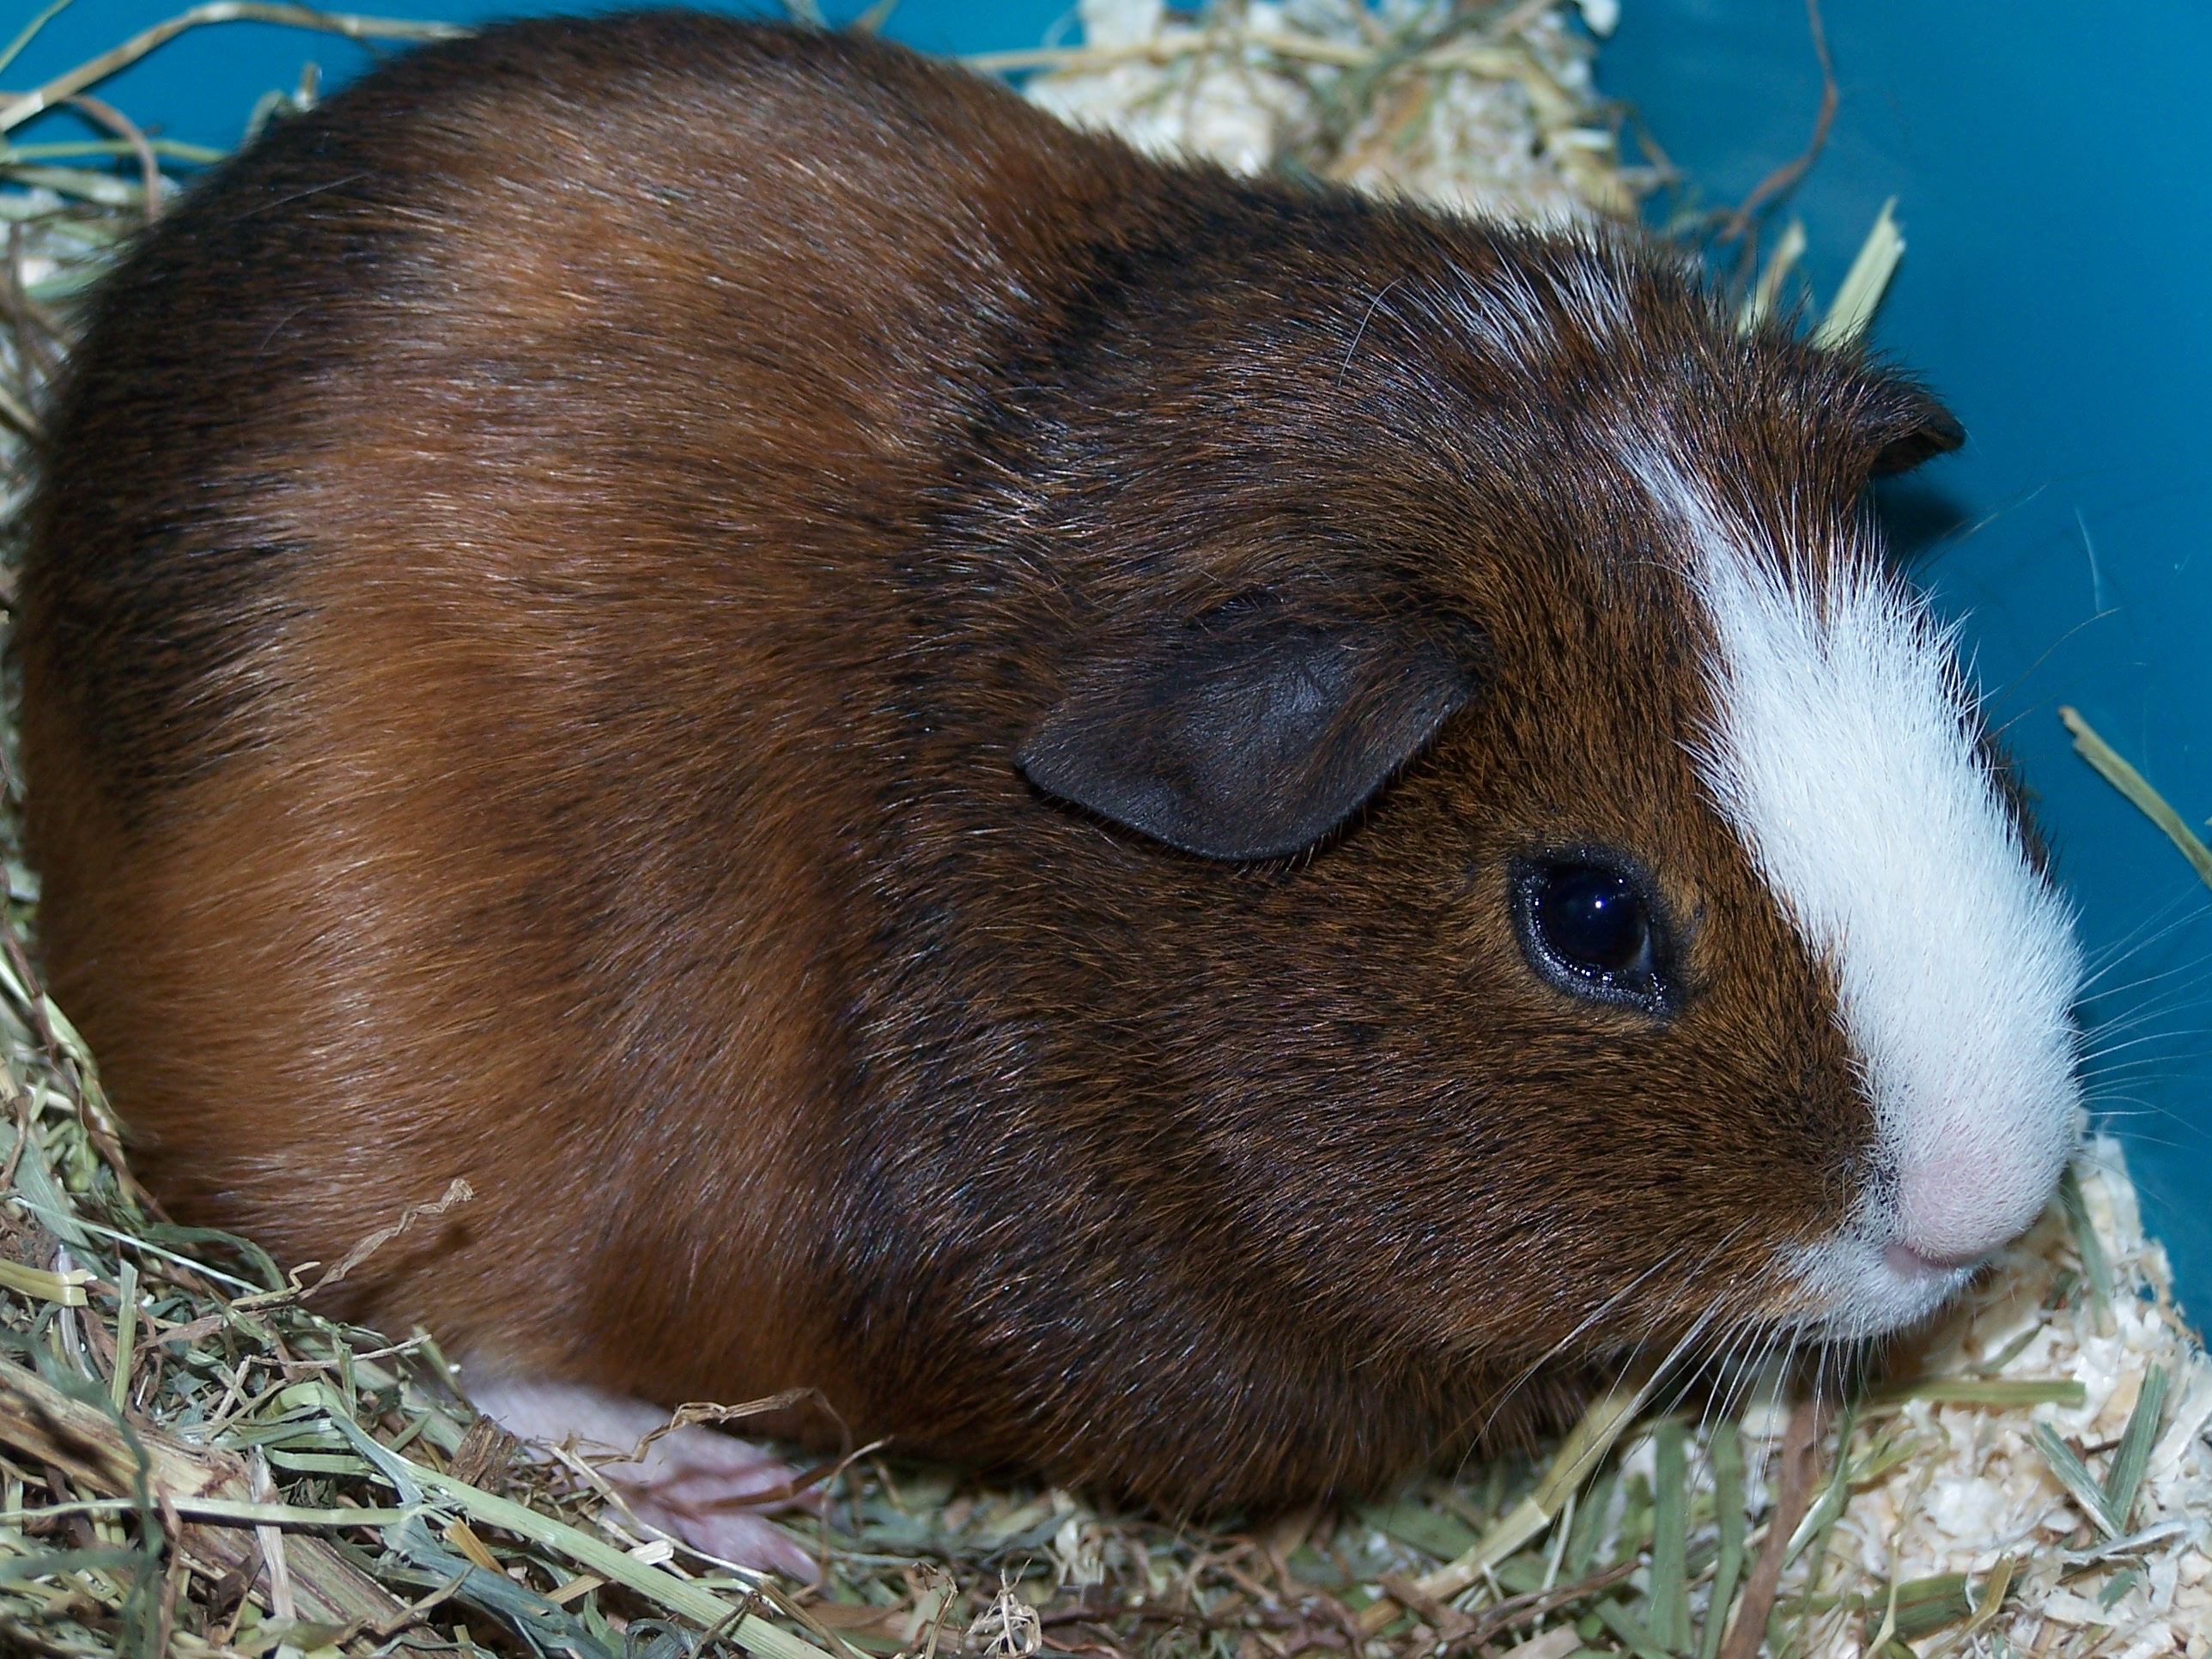 brown guinea pig